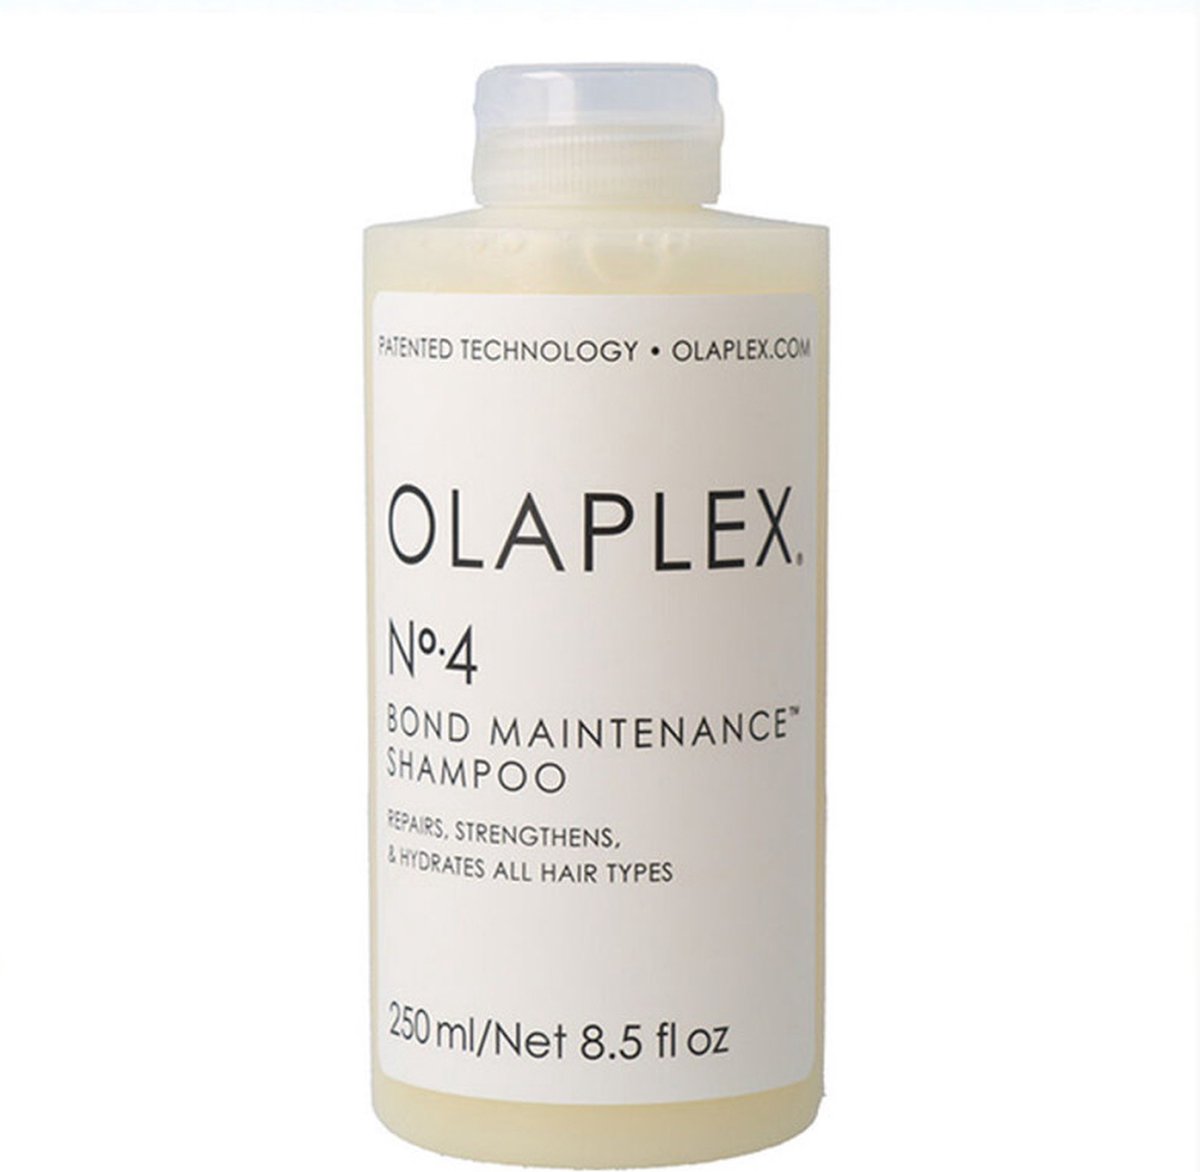 Olaplex No.4 Bond Maintainance Shampoo - 250 ml - Olaplex